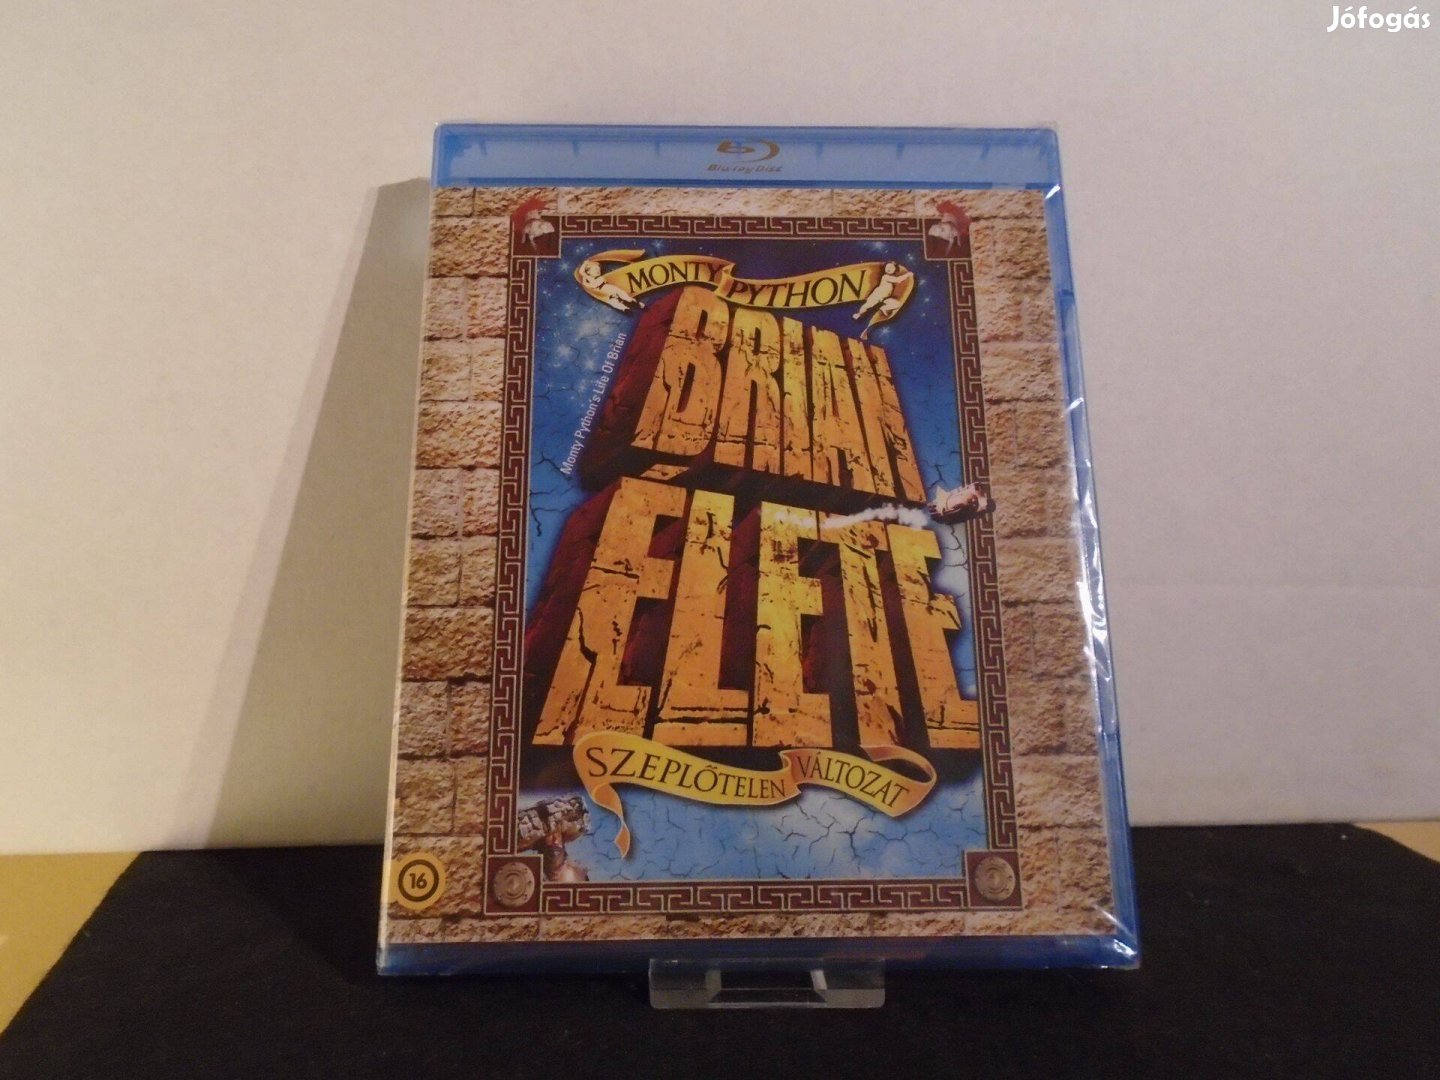 Monty Python: Brian élete 1979 Blu-ray / bluray